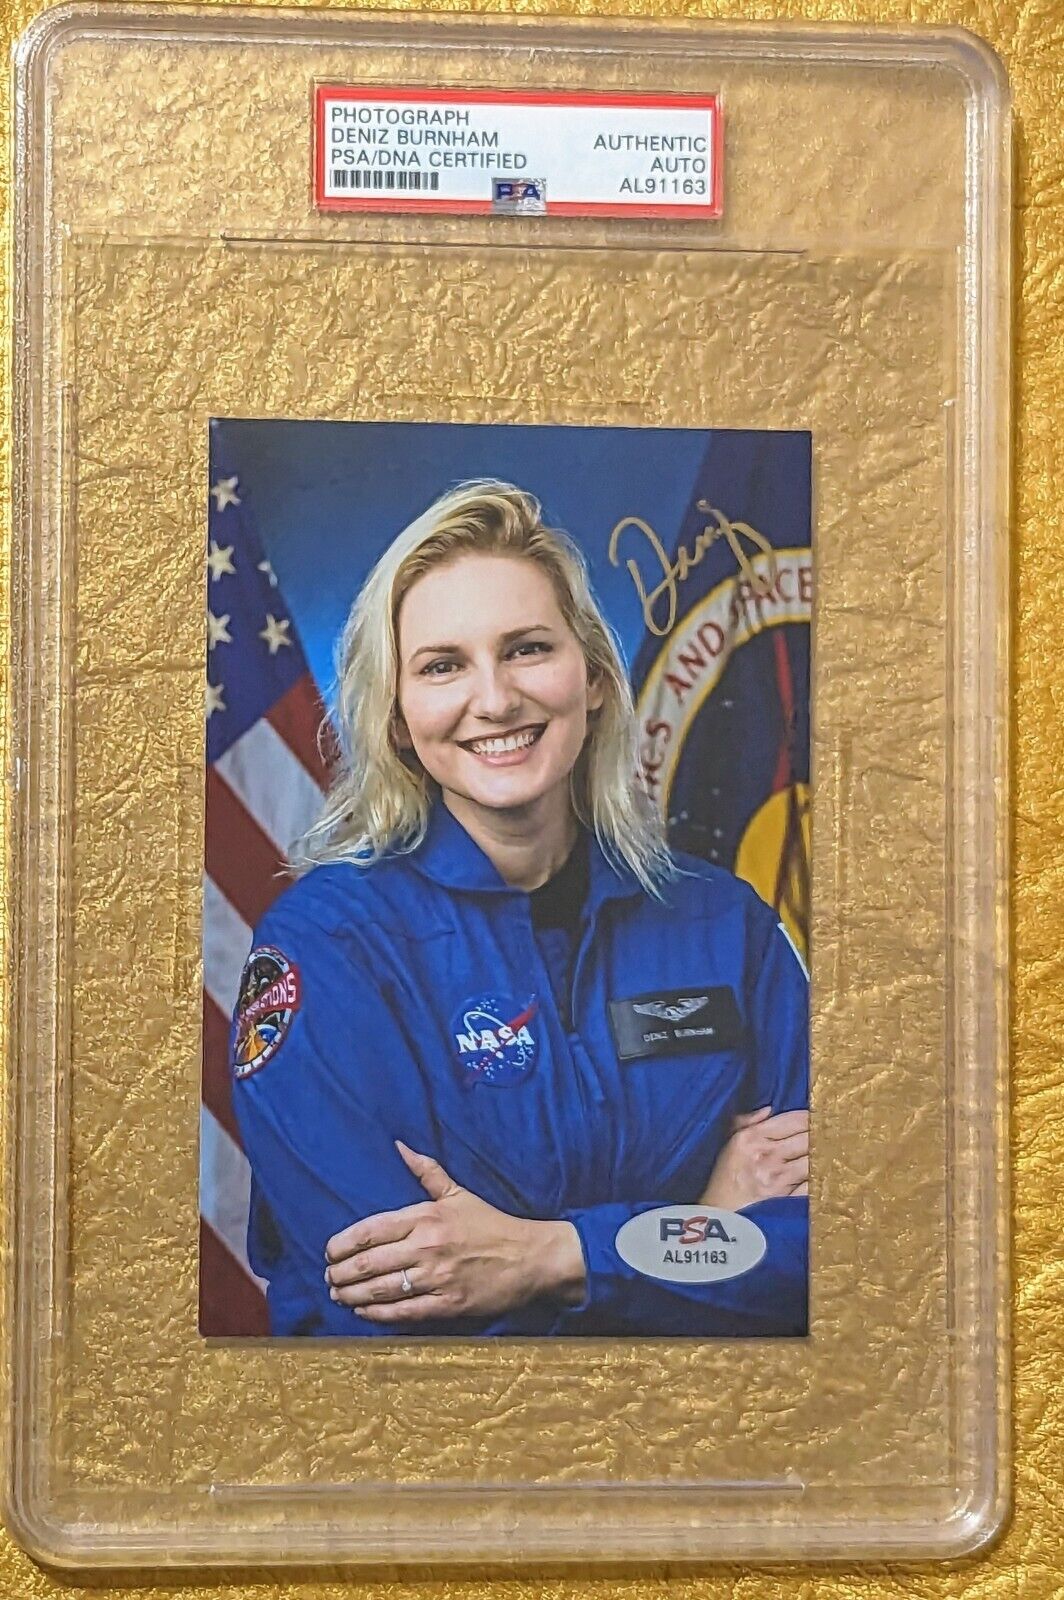 NASA Astronaut Deniz Burnham Autograph PSA DNA Signed Photo 🚀